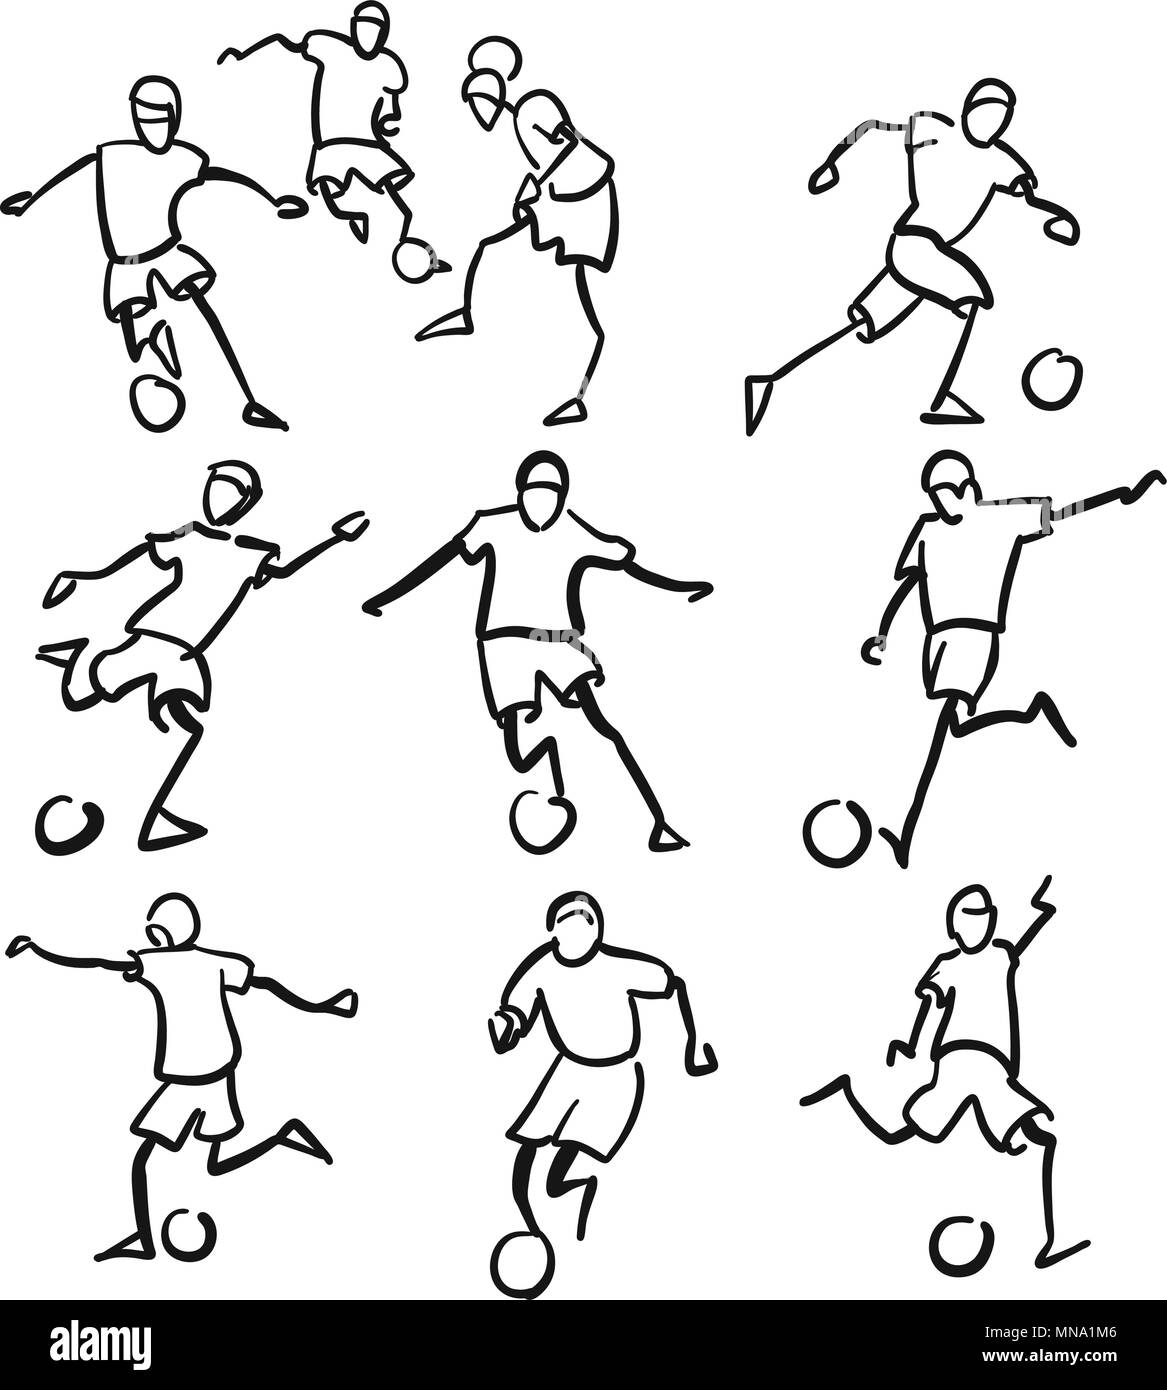 Football or Soccer Player Motion Sketch Studies, hand-drawn vector Outline Artwork Stock Vector